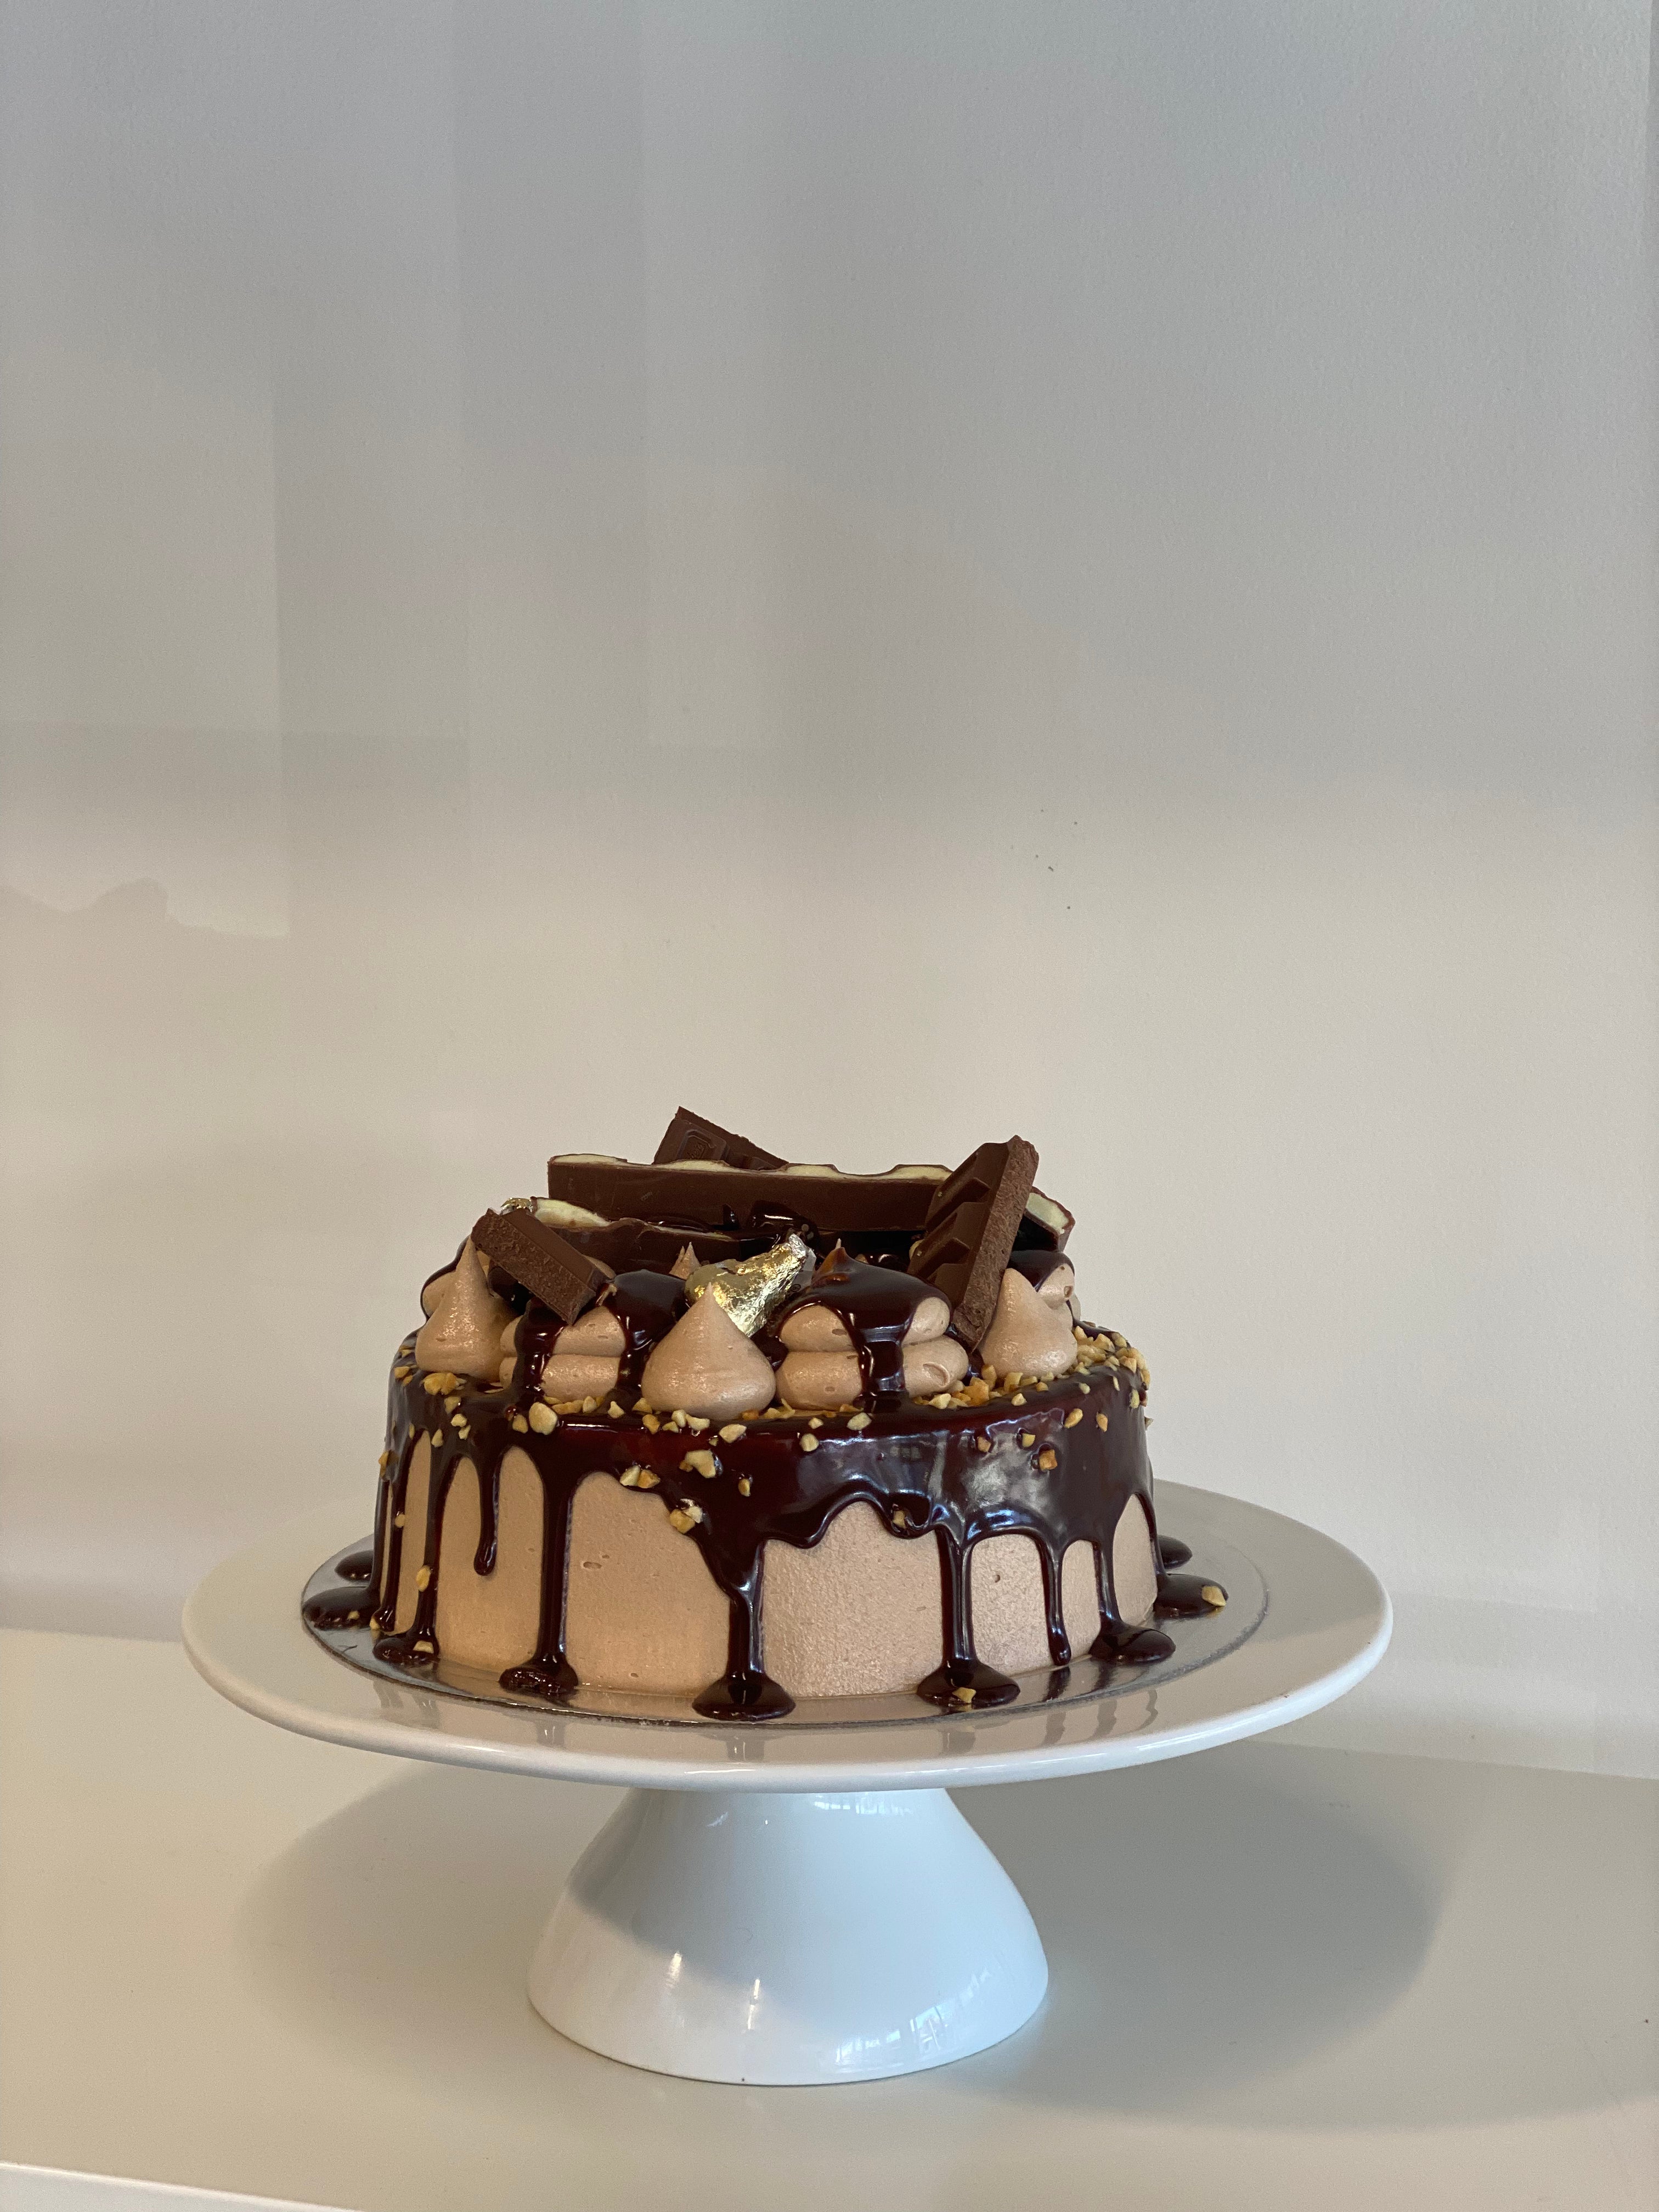 Nutella Chocolate Overload Cake